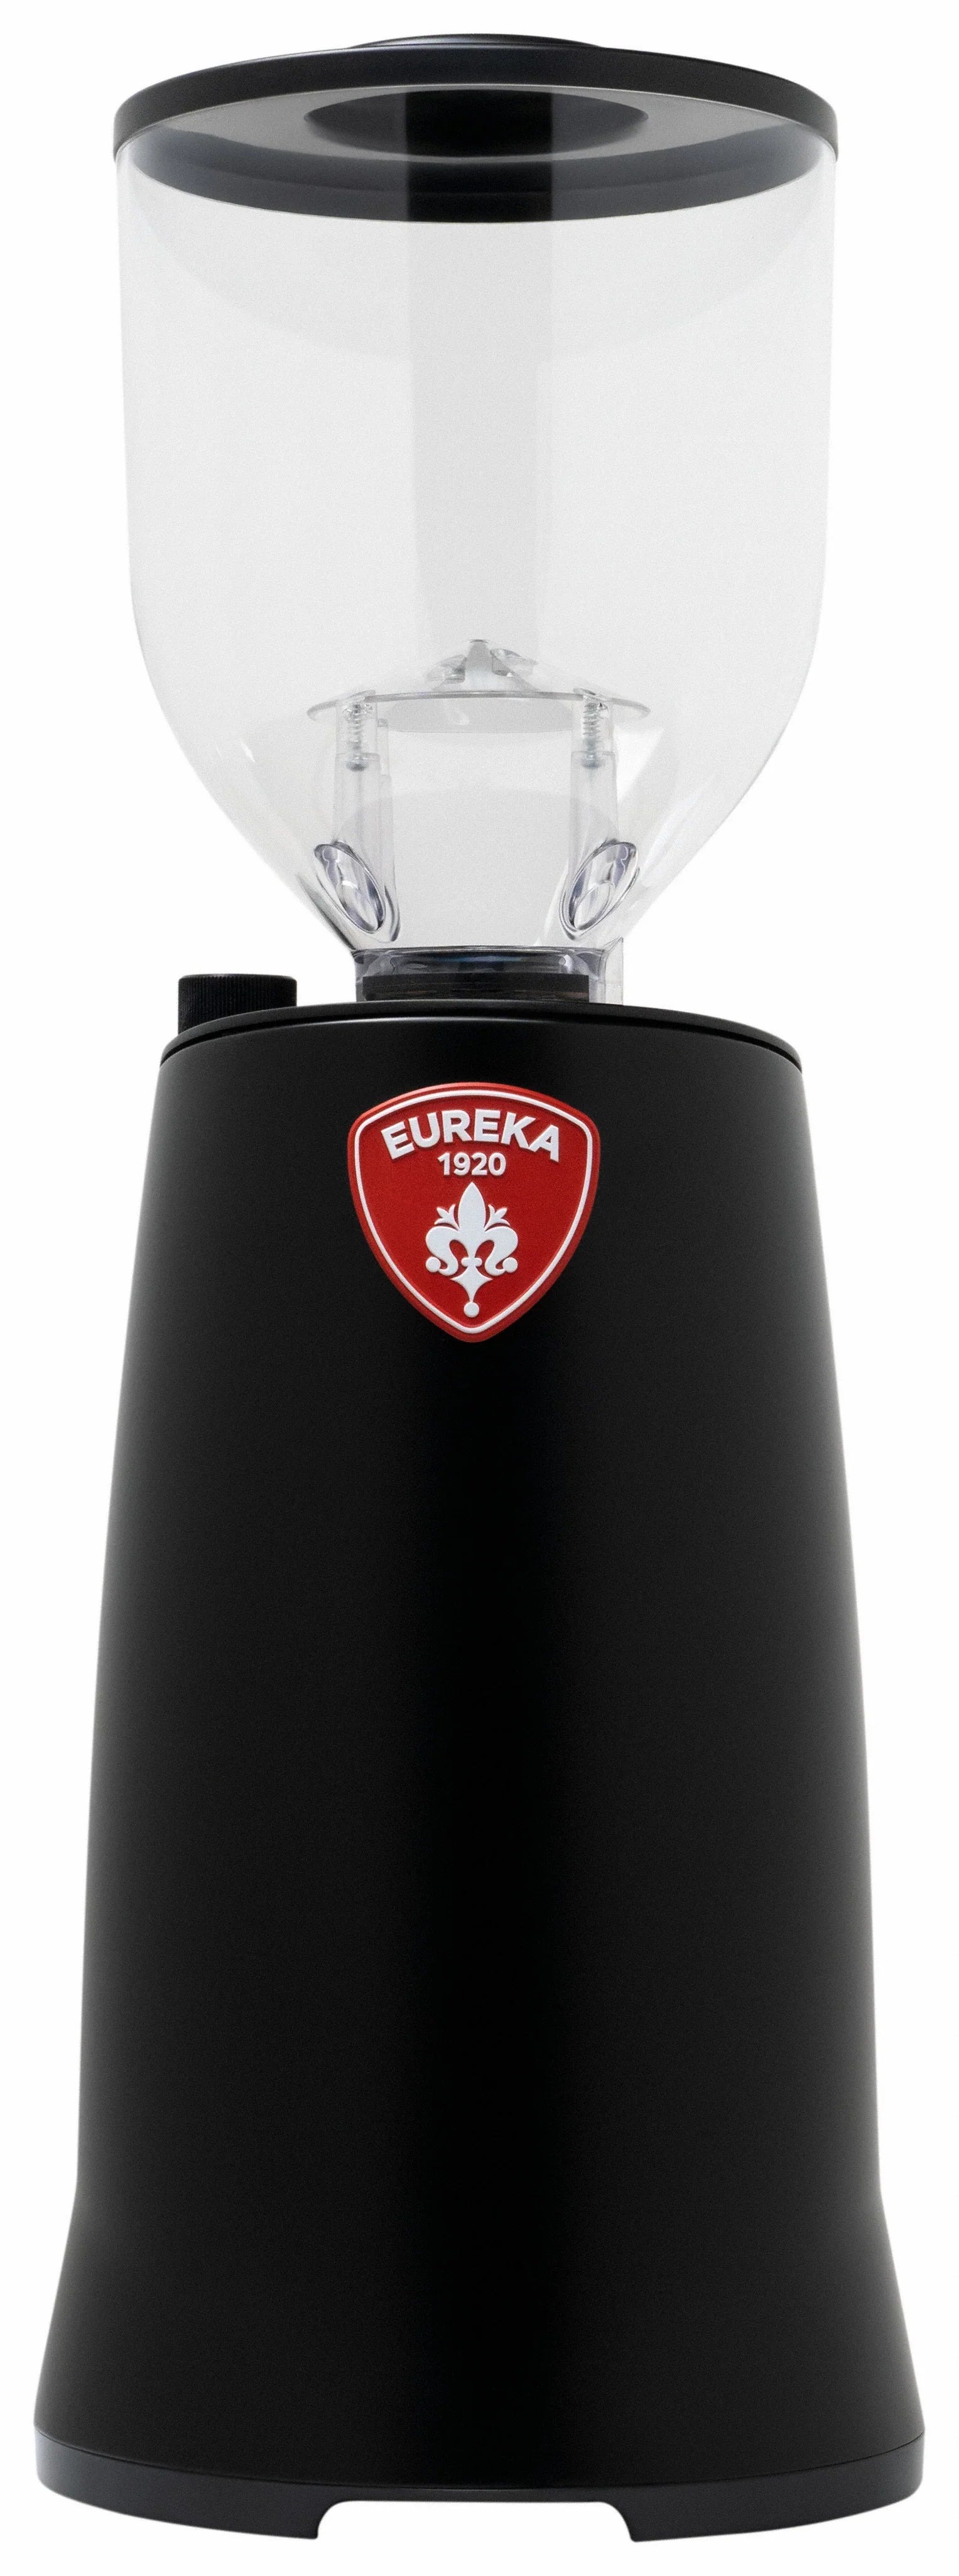 Eureka - Helios 65 Espresso Grinder